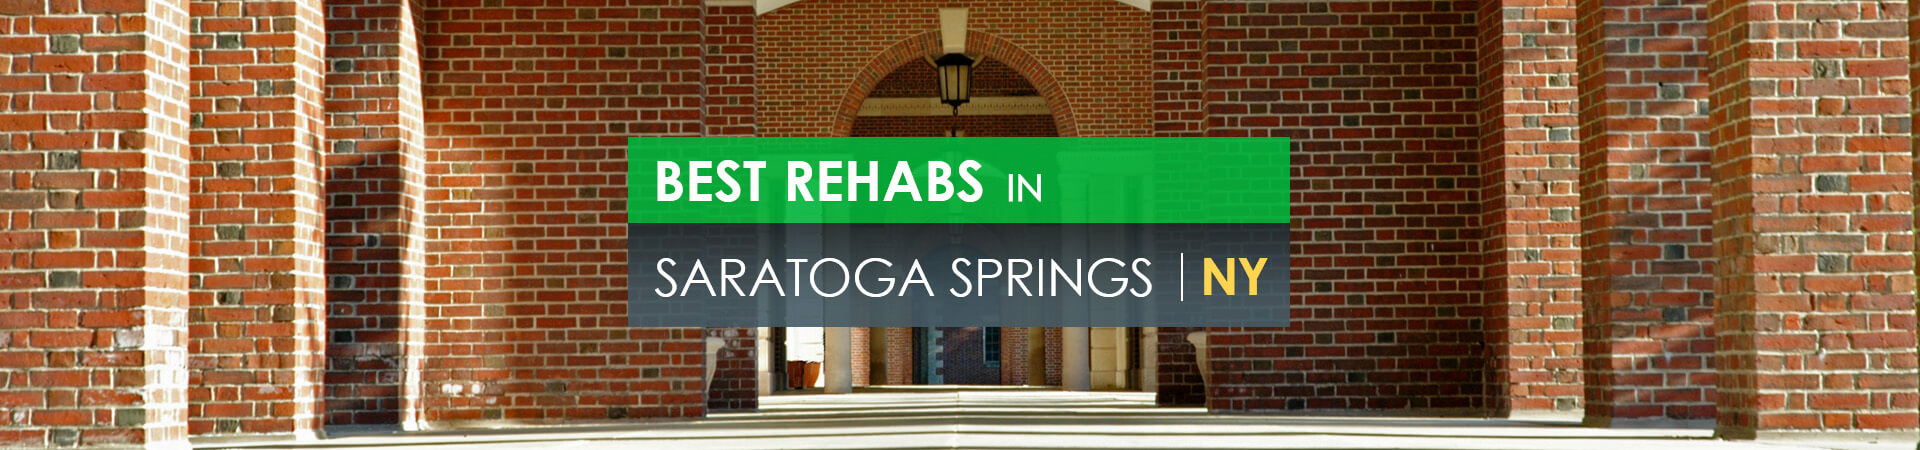 Best rehabs in Saratoga Springs, NY